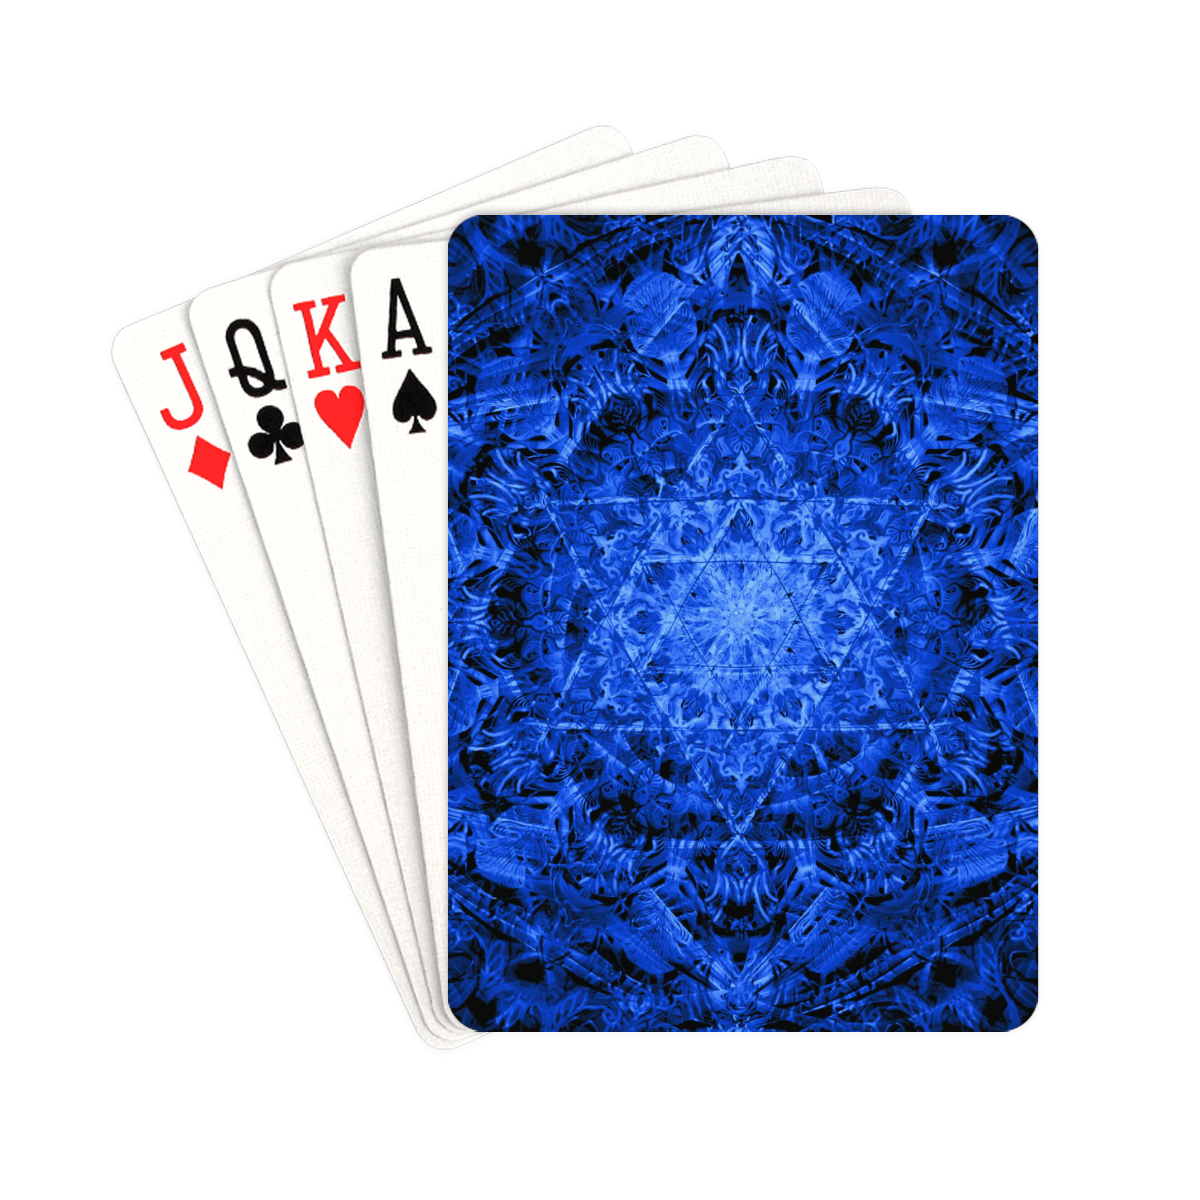 david star mandala 14 Playing Cards 2.5"x3.5"